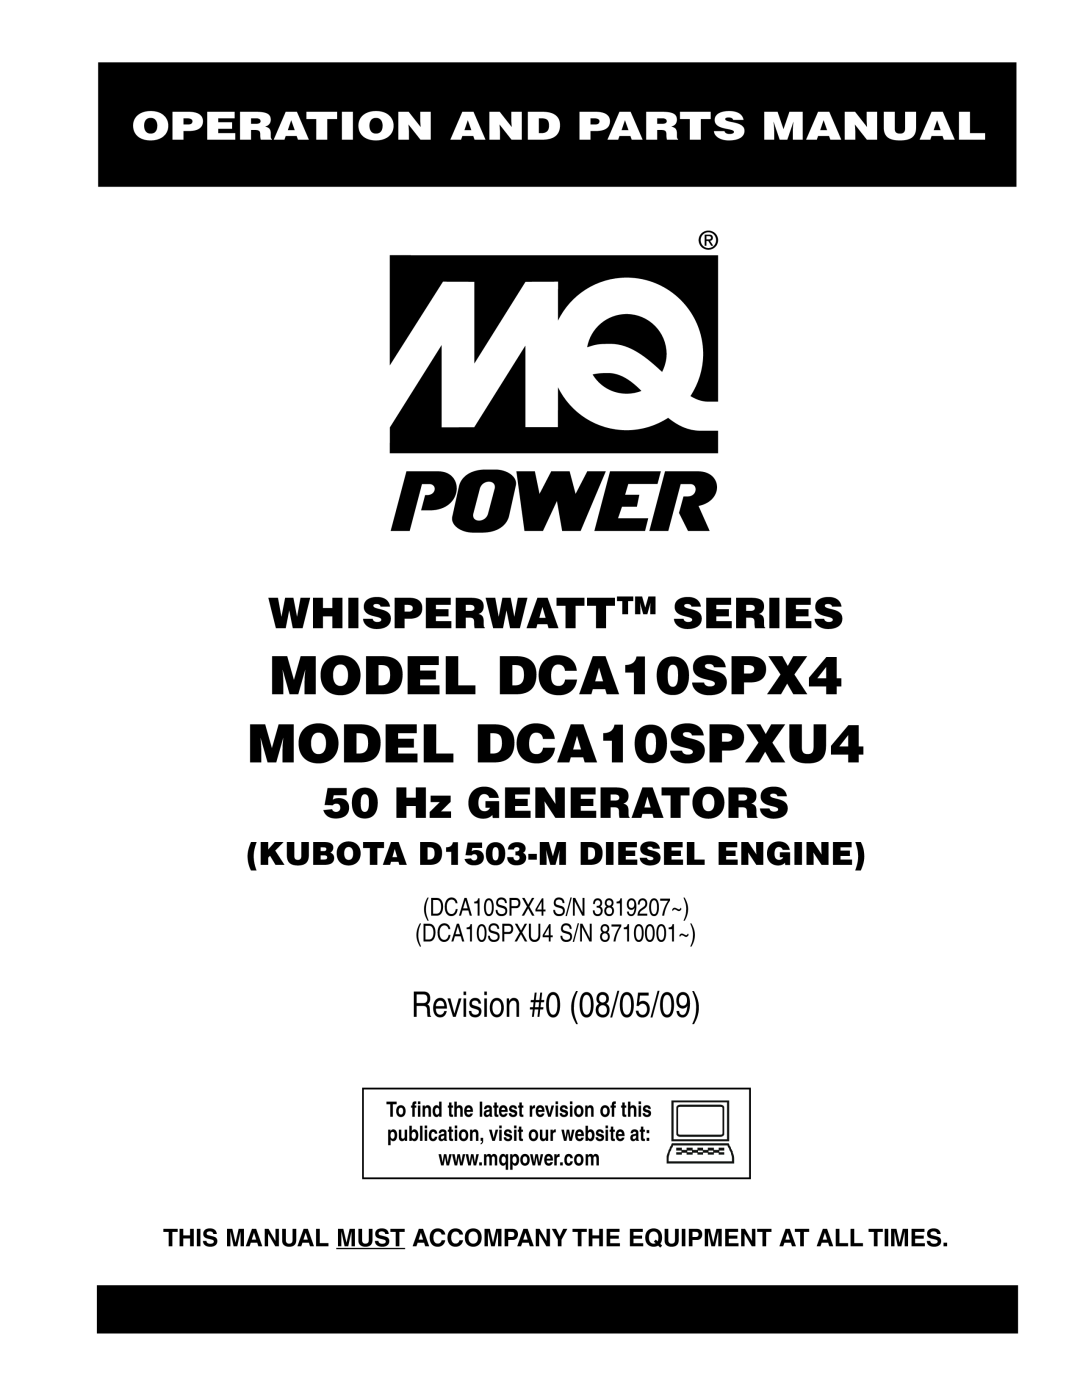 Multiquip DCA10SPXU4 operation manual Operation And Parts Manual, KUBOTA D1503-M DIESEL ENGINE, Whisperwatttm Series 